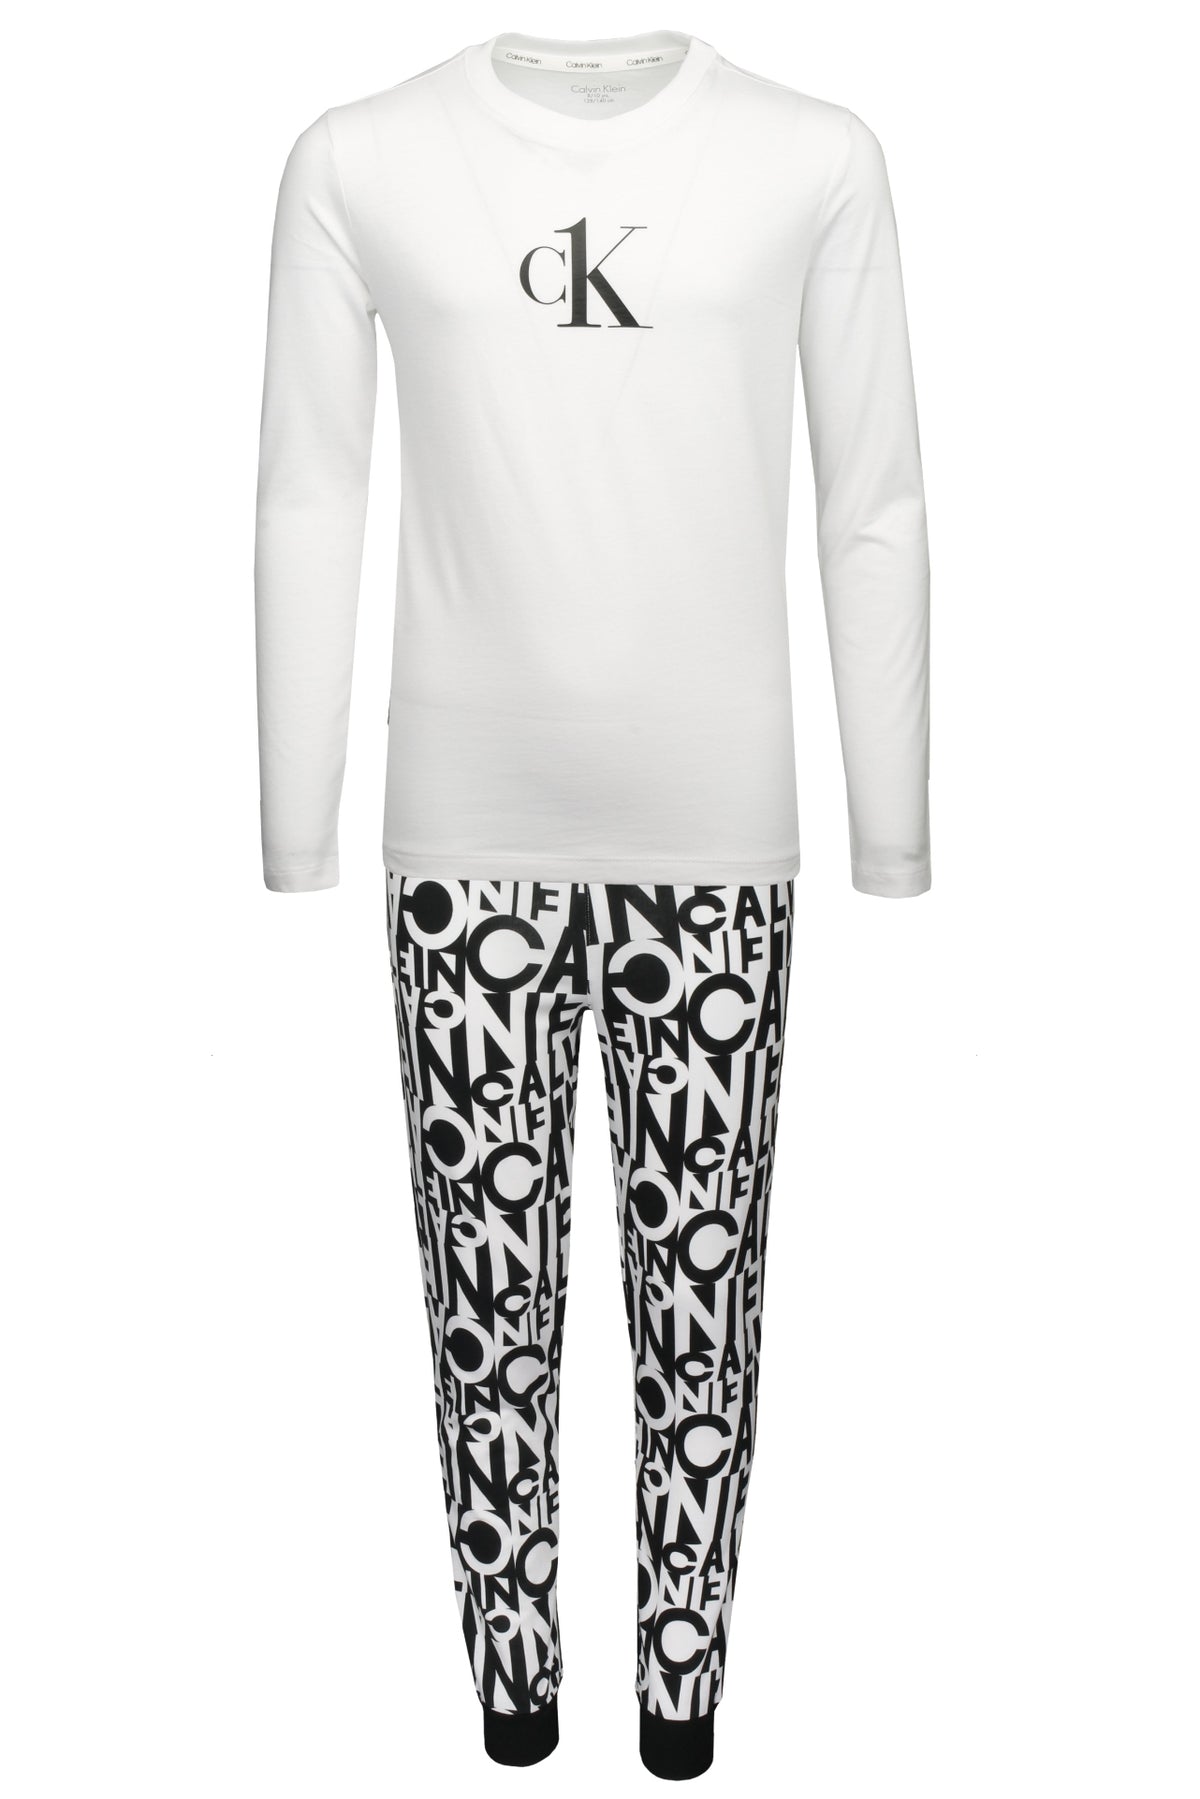 Calvin Klein Girls White & Navy Pyjama Set